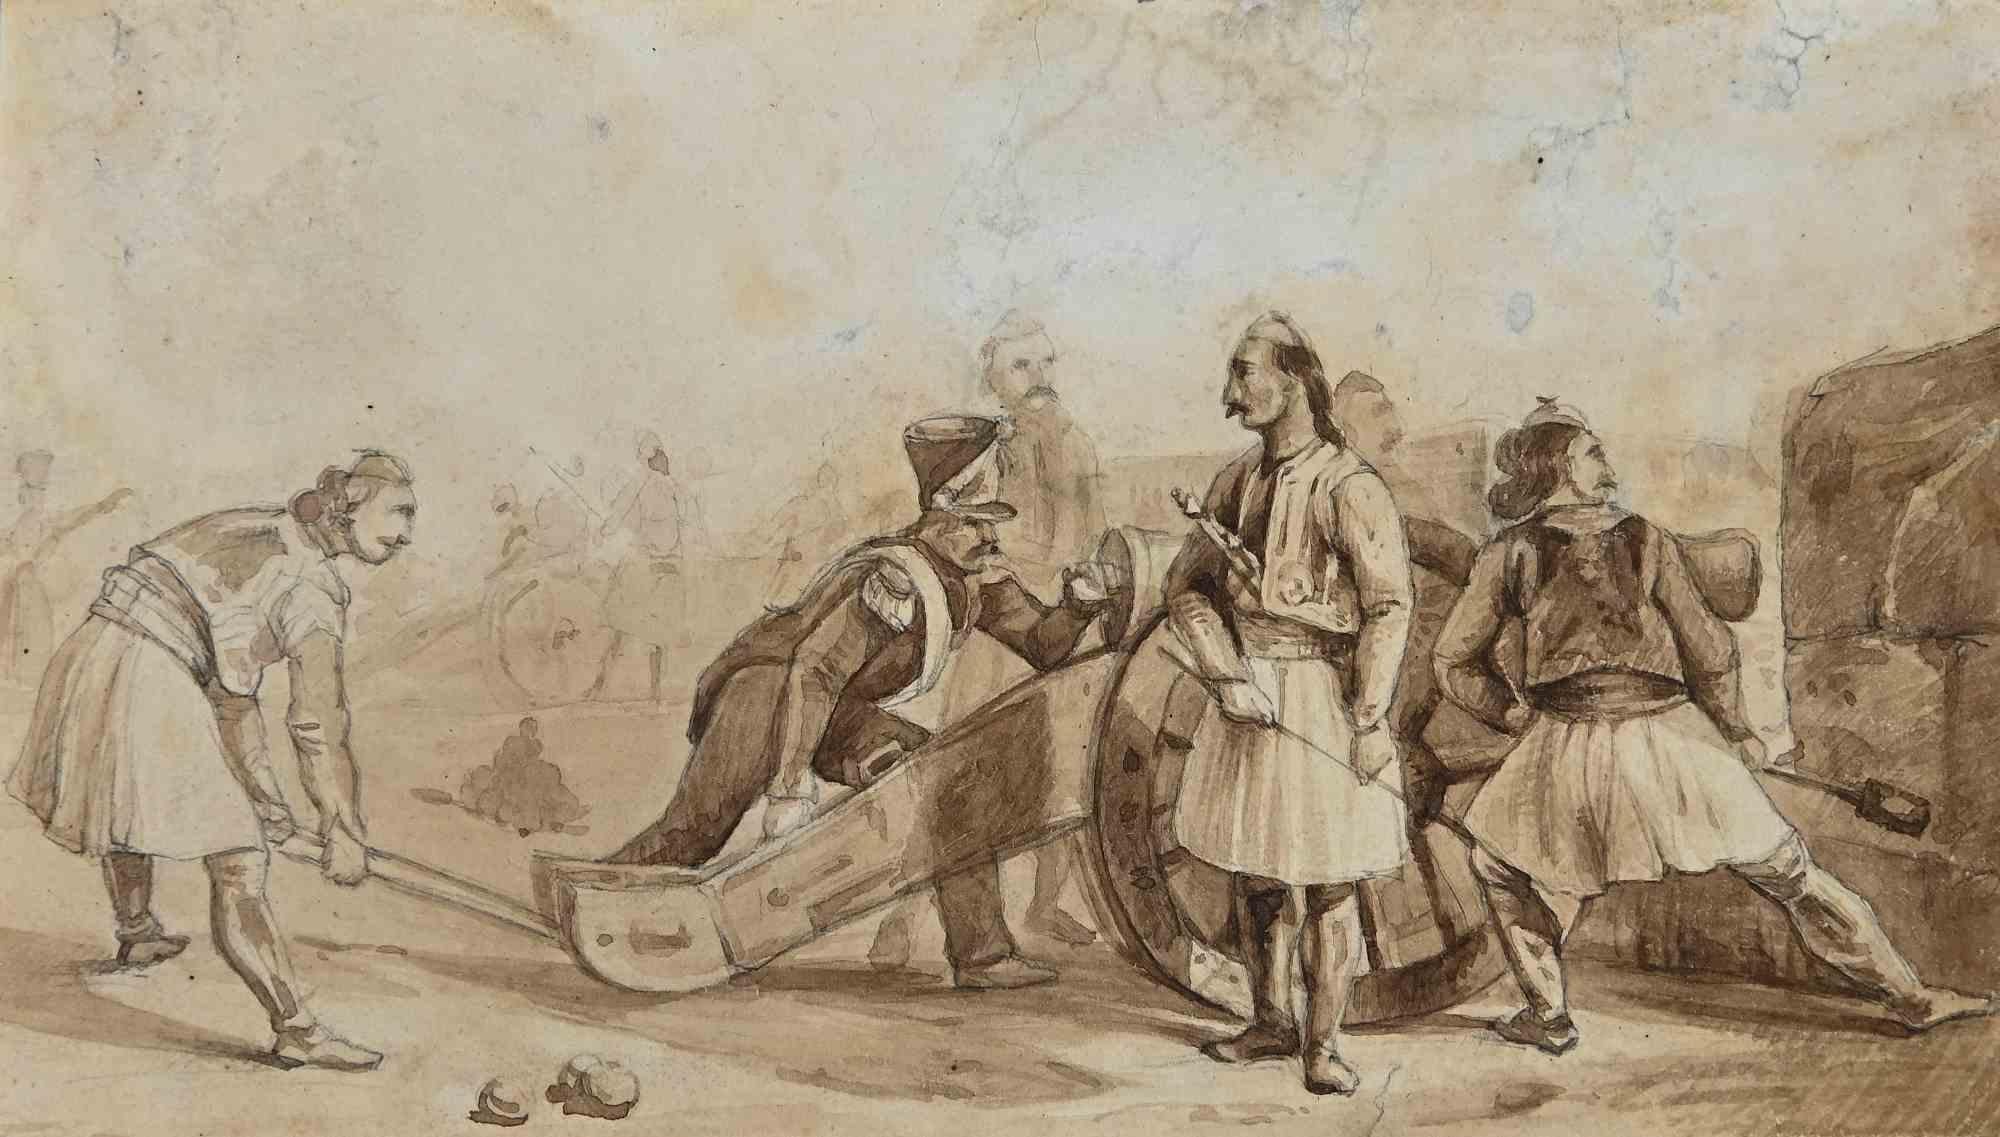 Unknown Figurative Art - Battle Preparation - Original Drawing - 19th Century